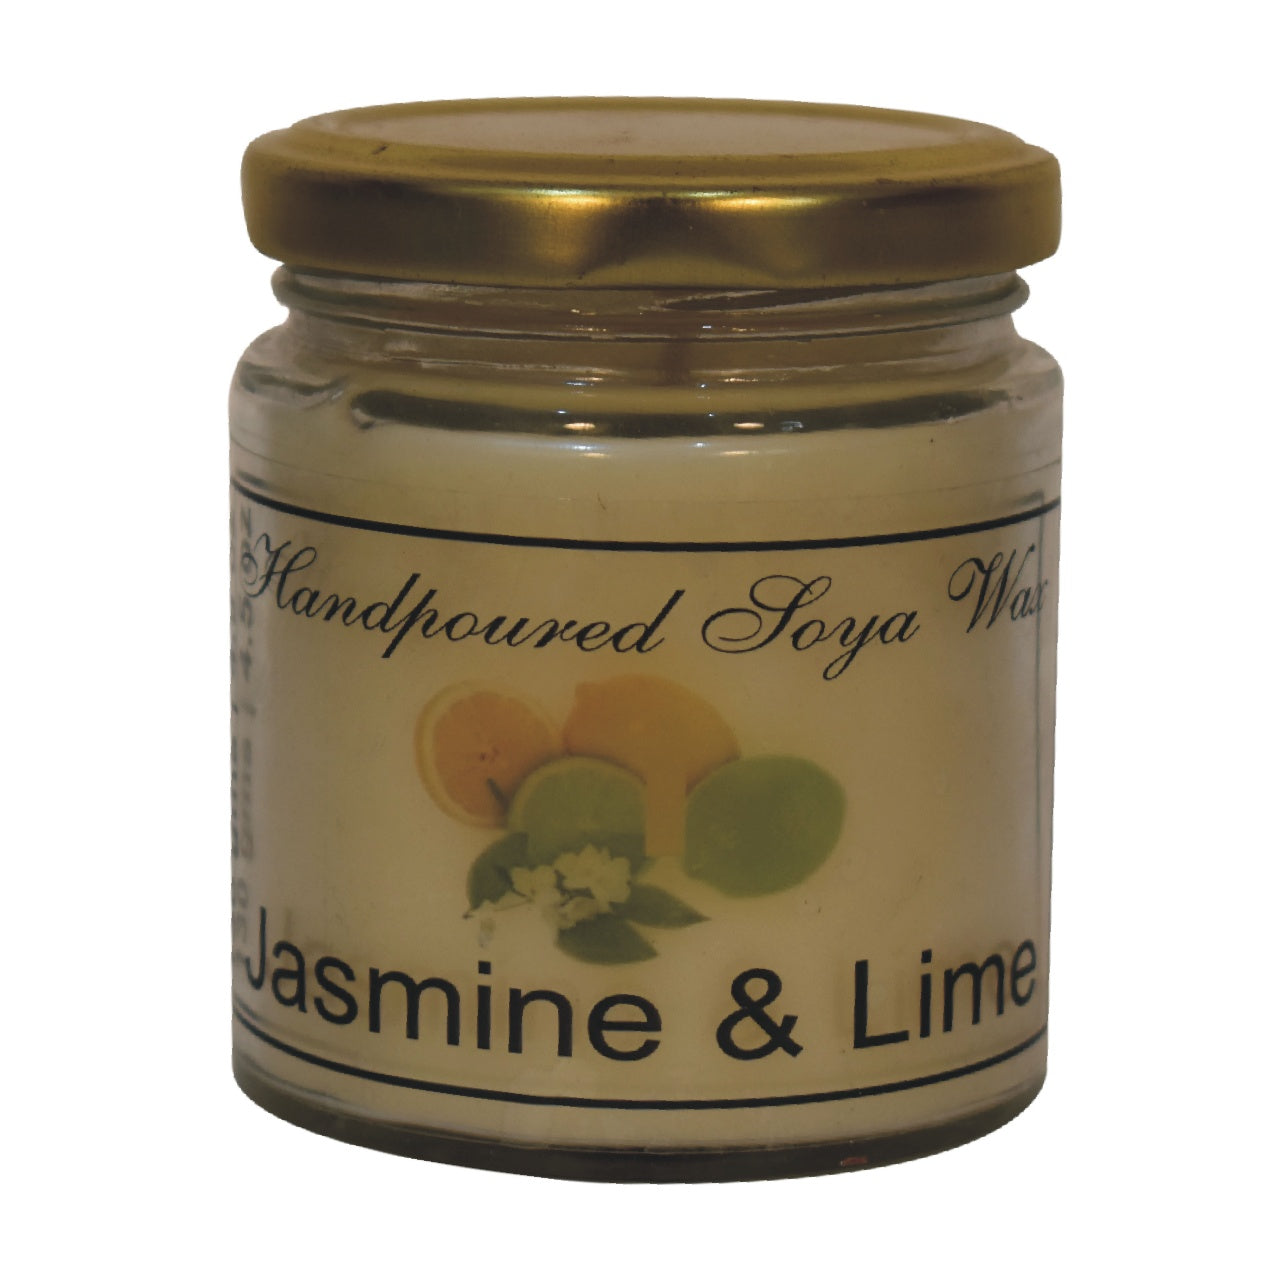 candle gift set of 3 white tea sage jasmine lime grapefuit mangosteen